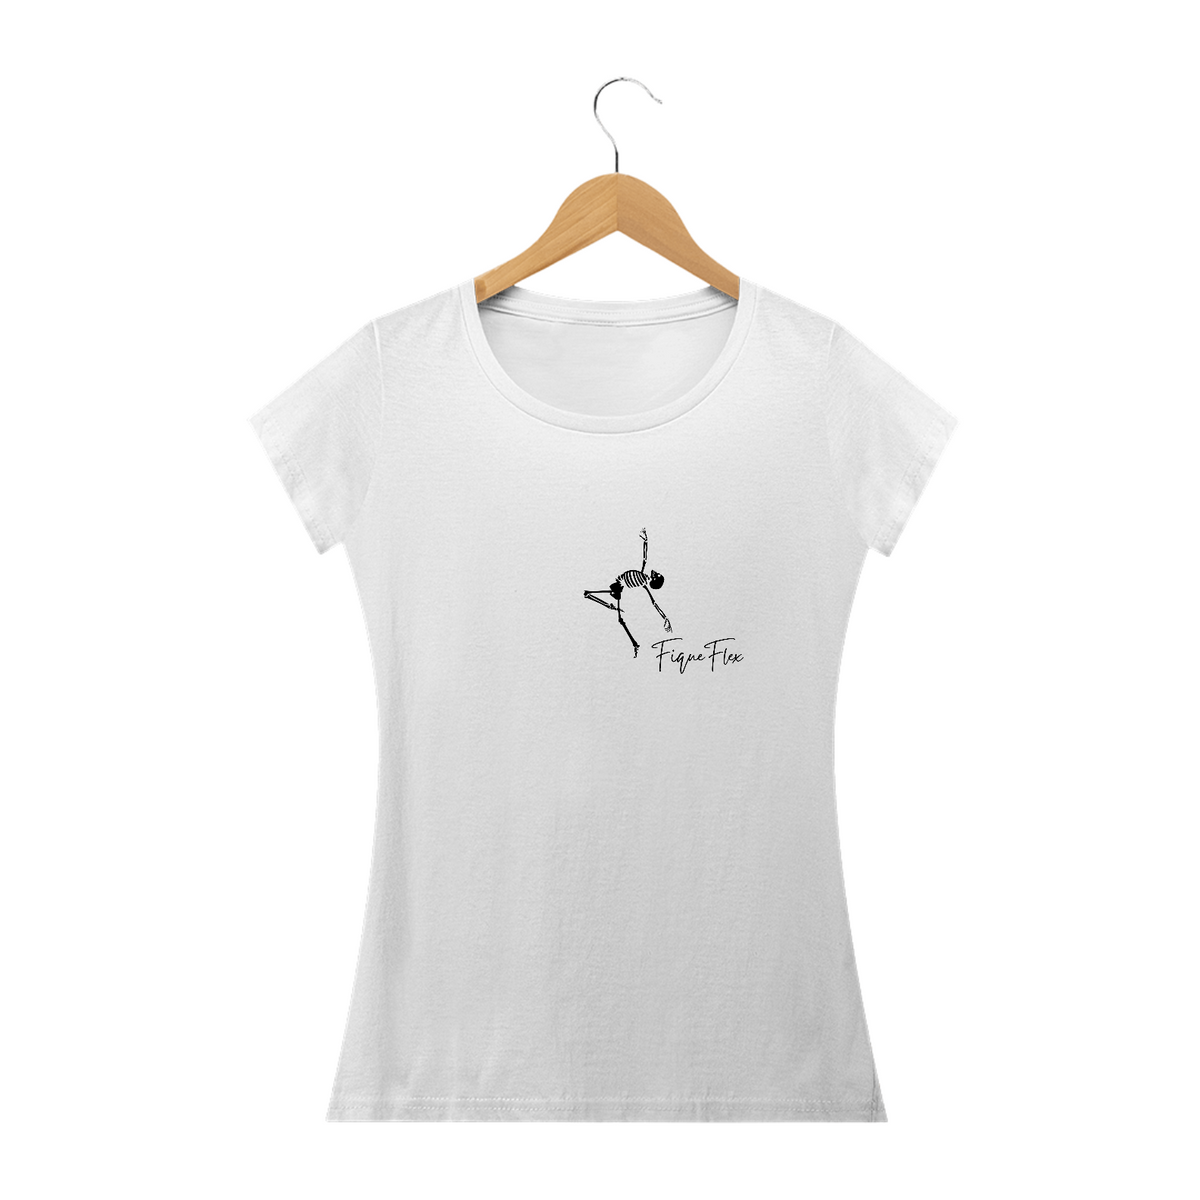 Nome do produto: Camiseta feminina fiqueflex